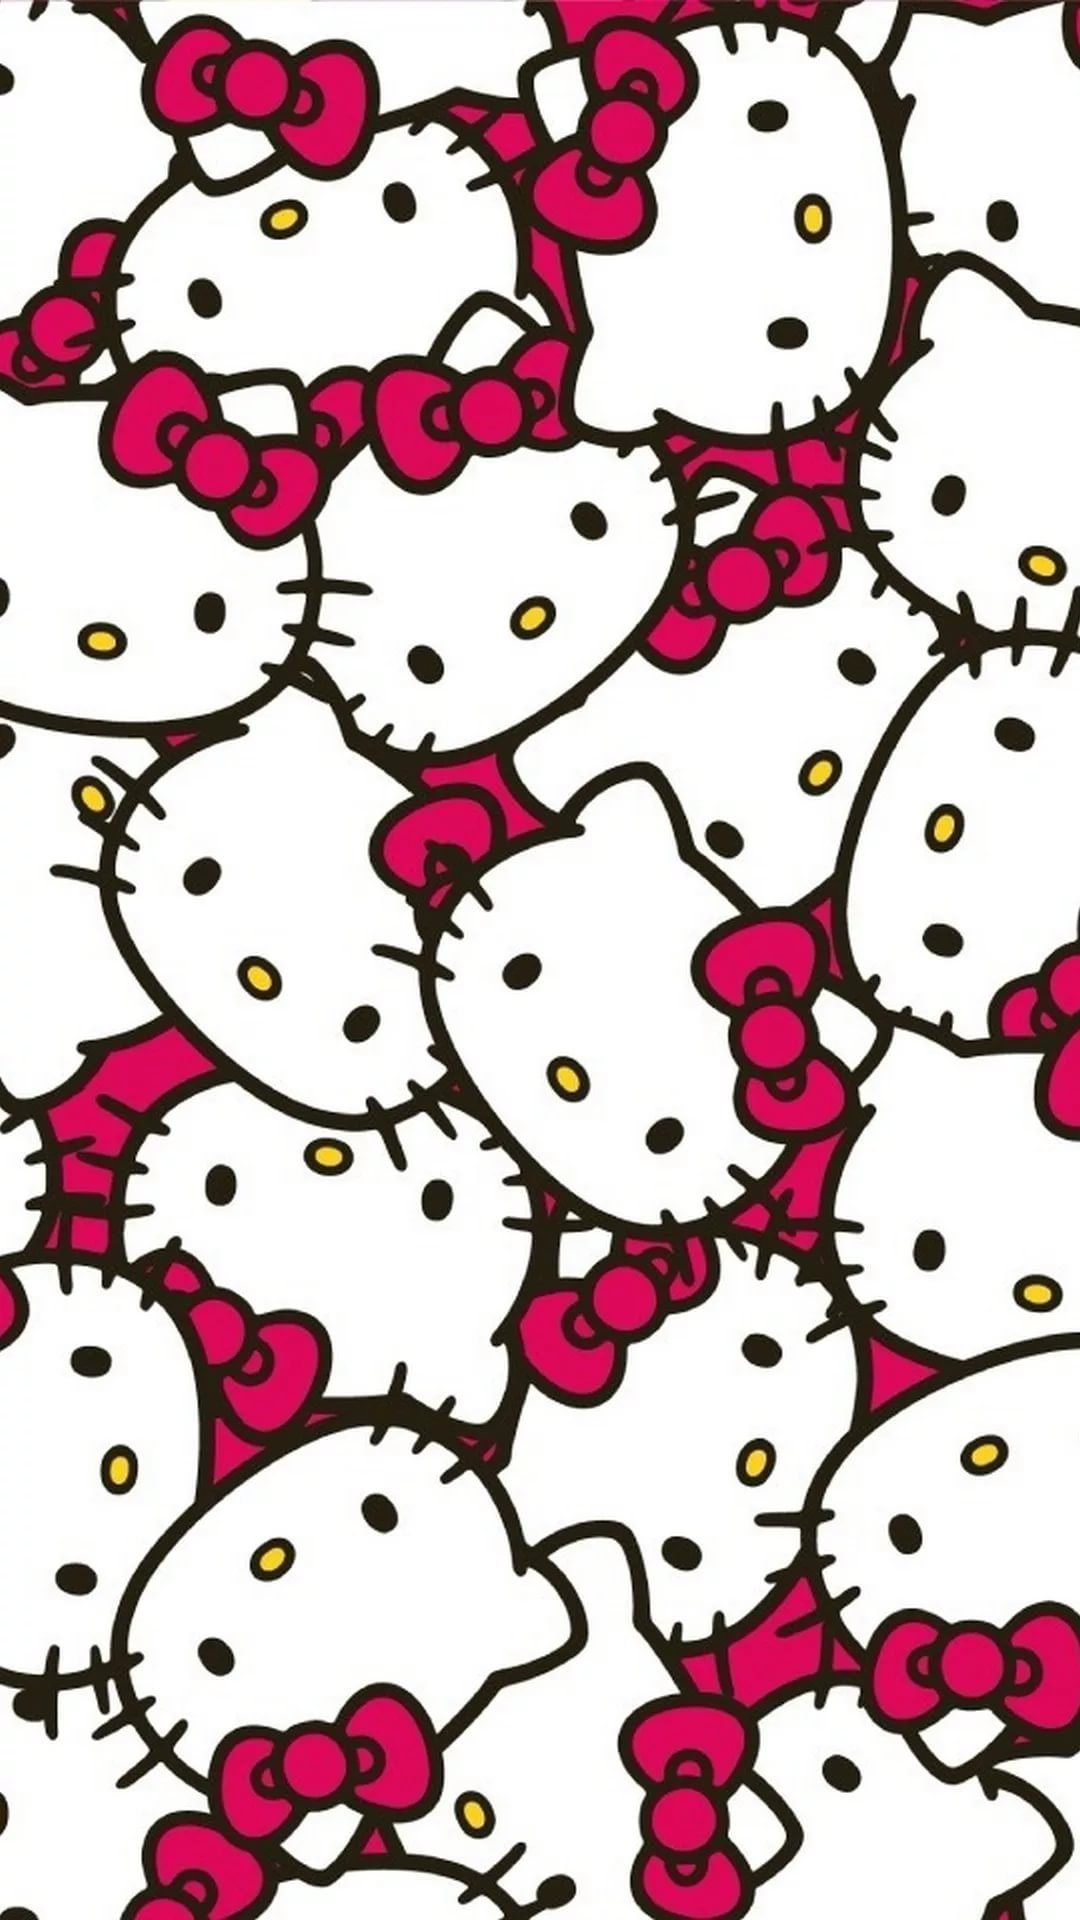 Hello Kitty iPhone 7 wallpaper